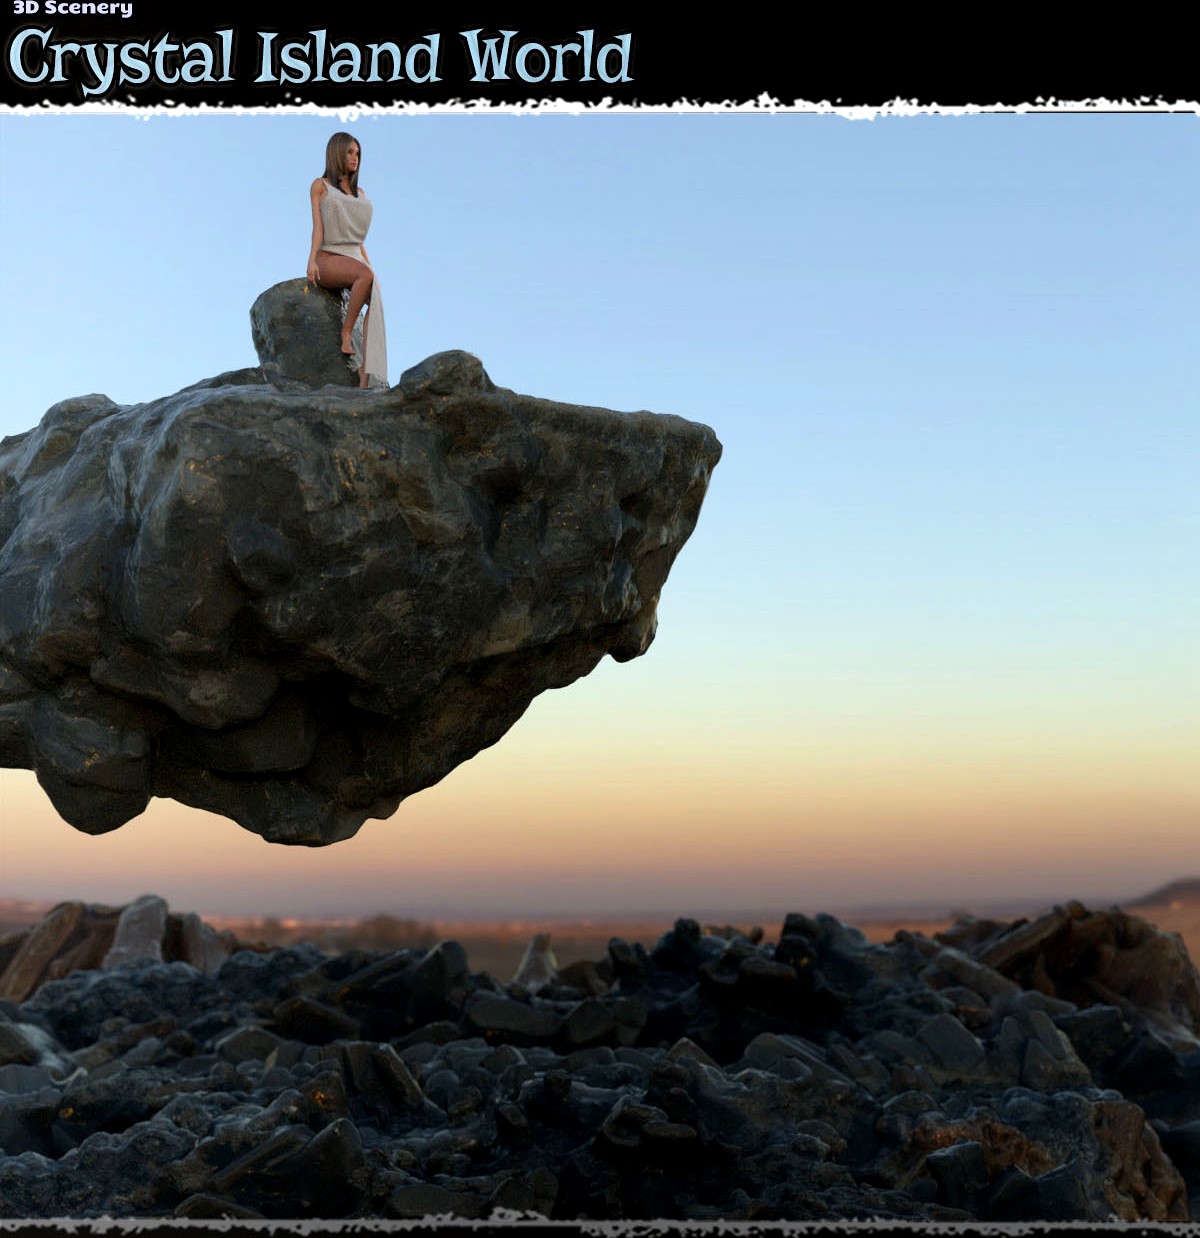 3D Scenery: Crystal Island World